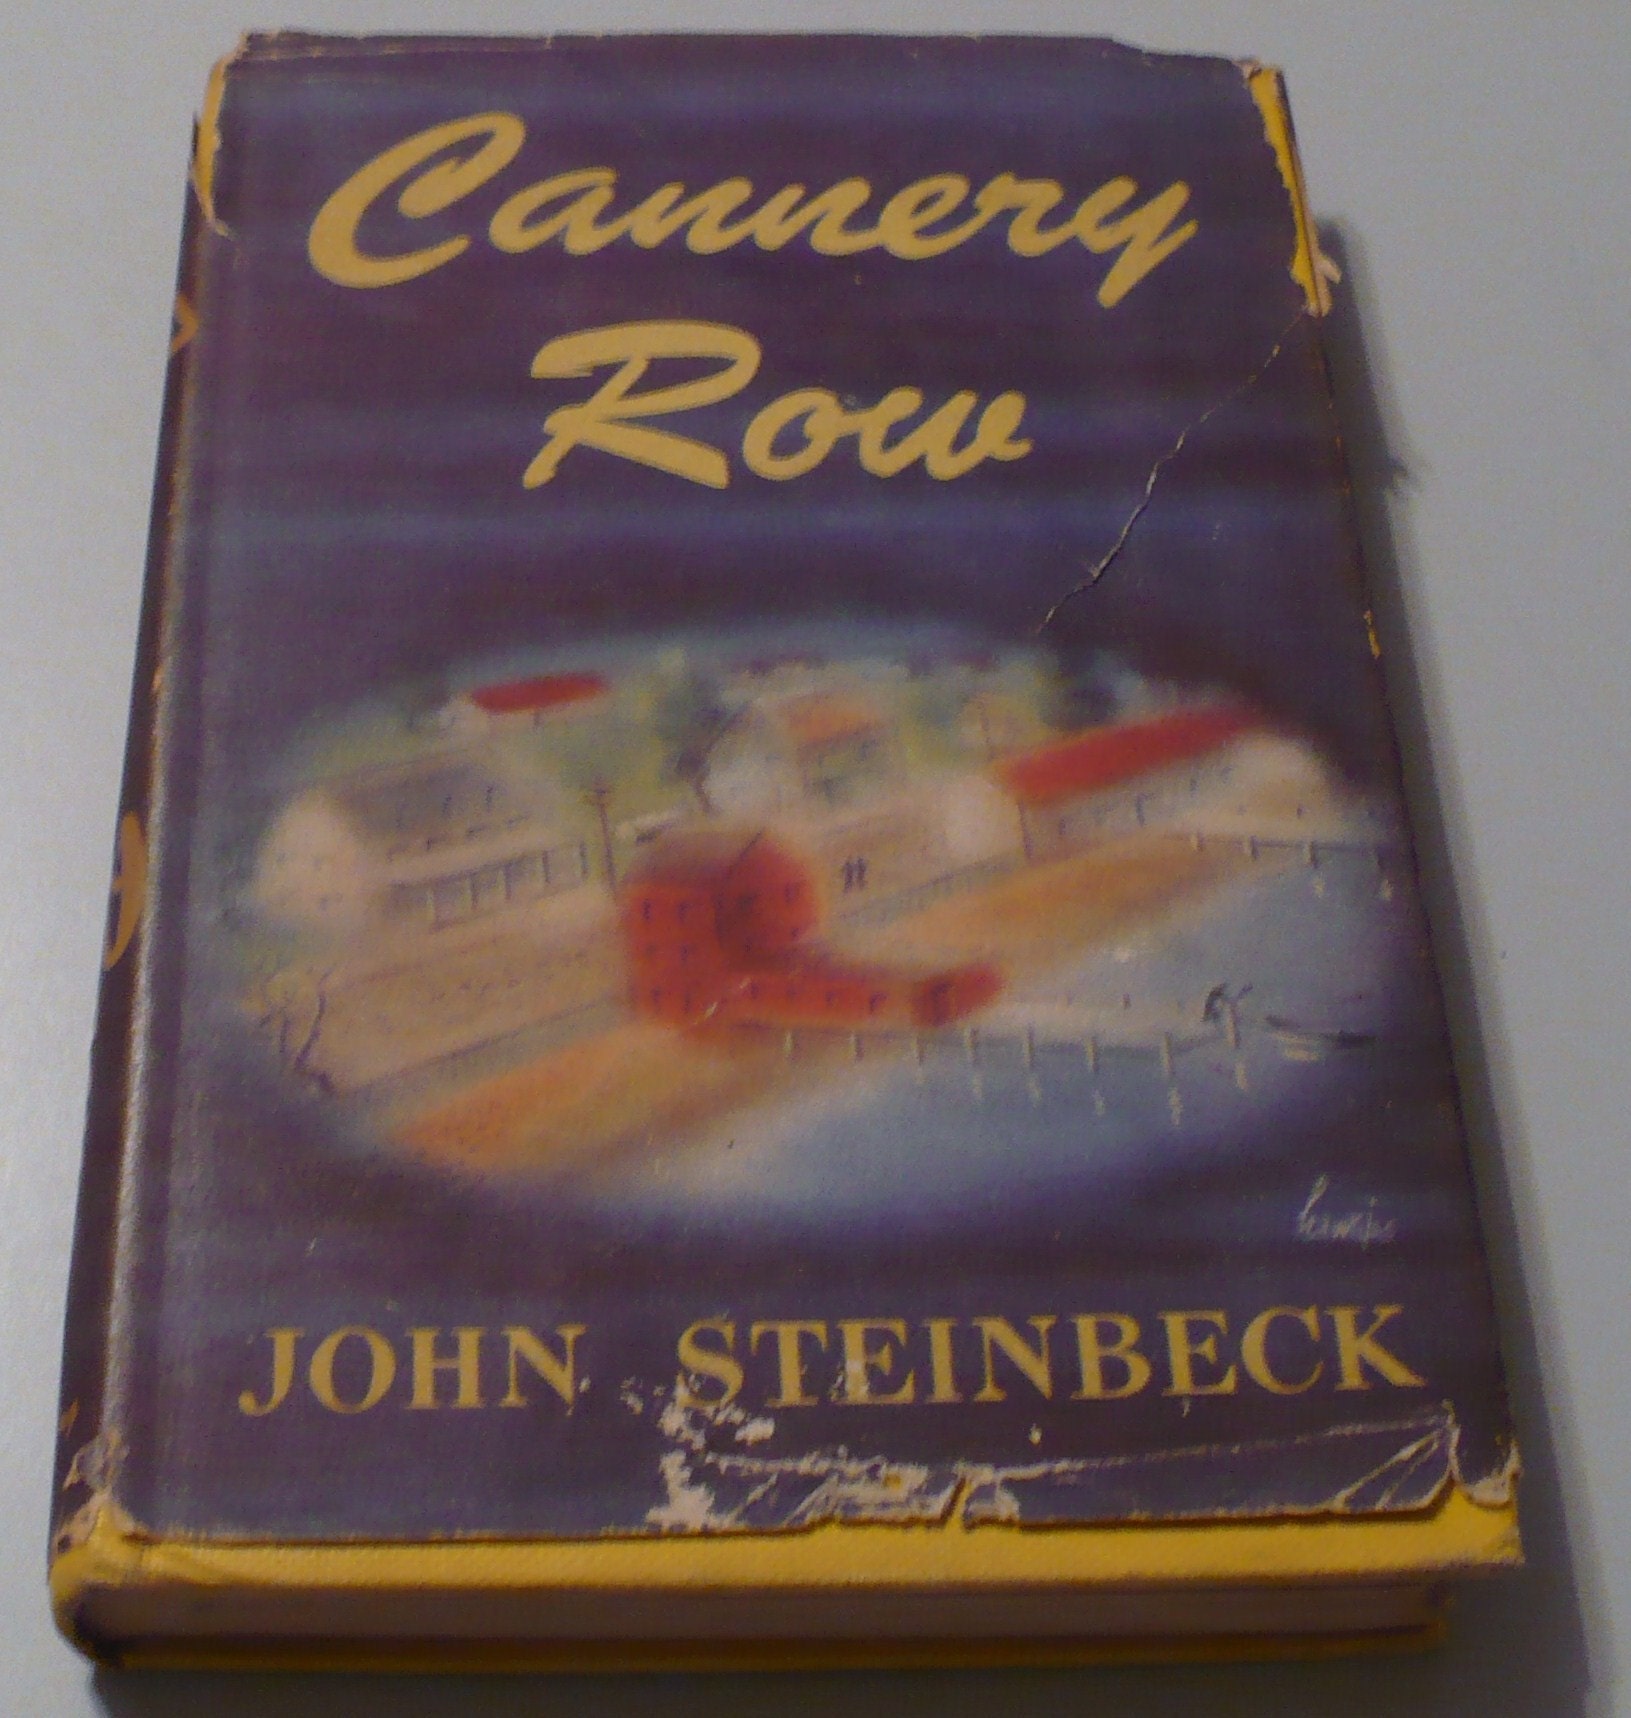 cannery row audio book